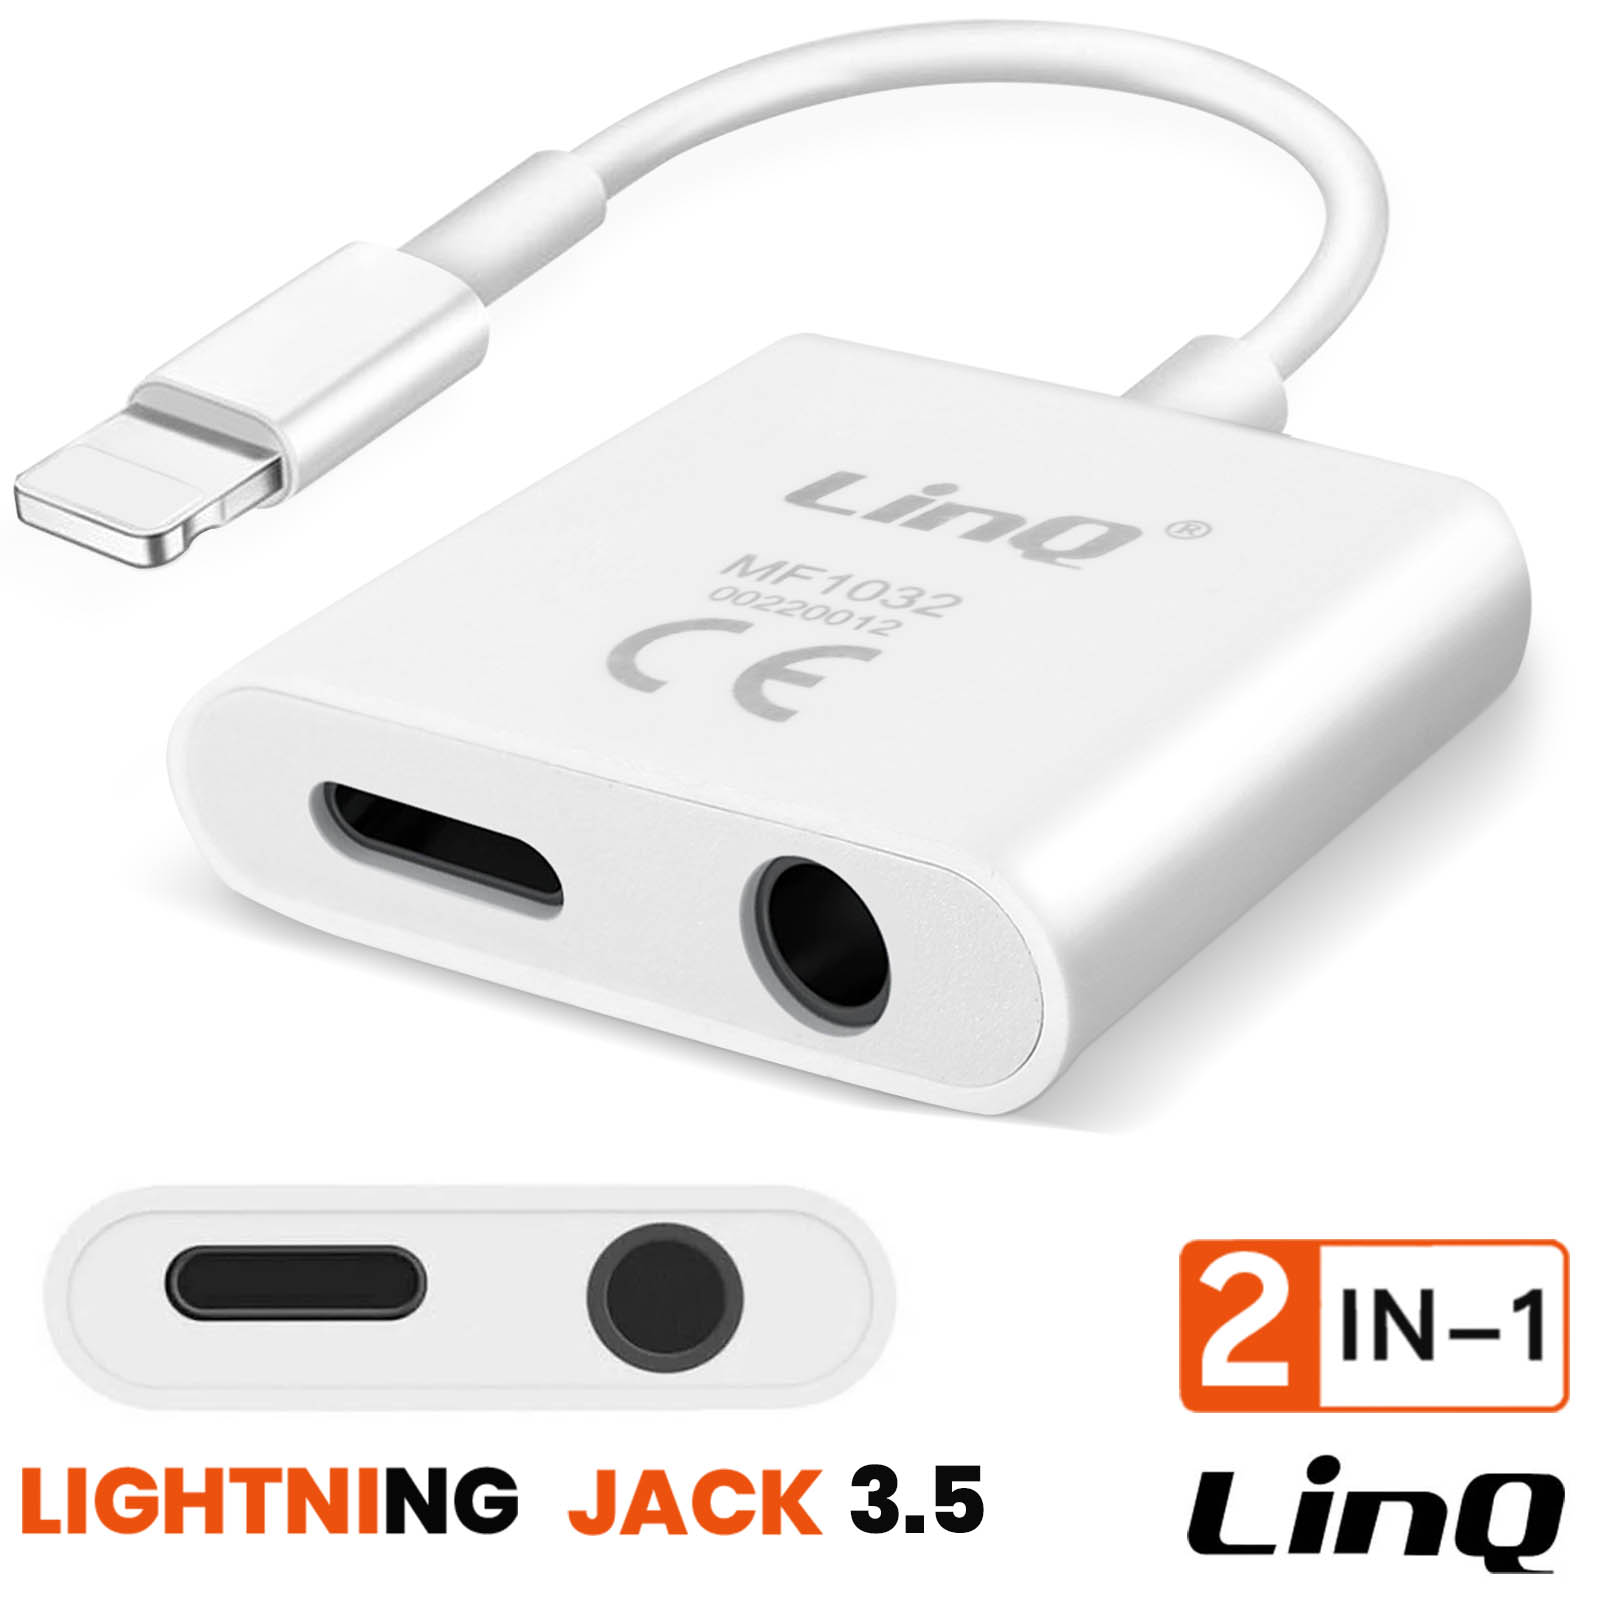 Adaptateur iPhone 2 en 1 Lightning vers Jack 3.5mm Audio + Lightning Charge  Plug and Play, LinQ - Blanc